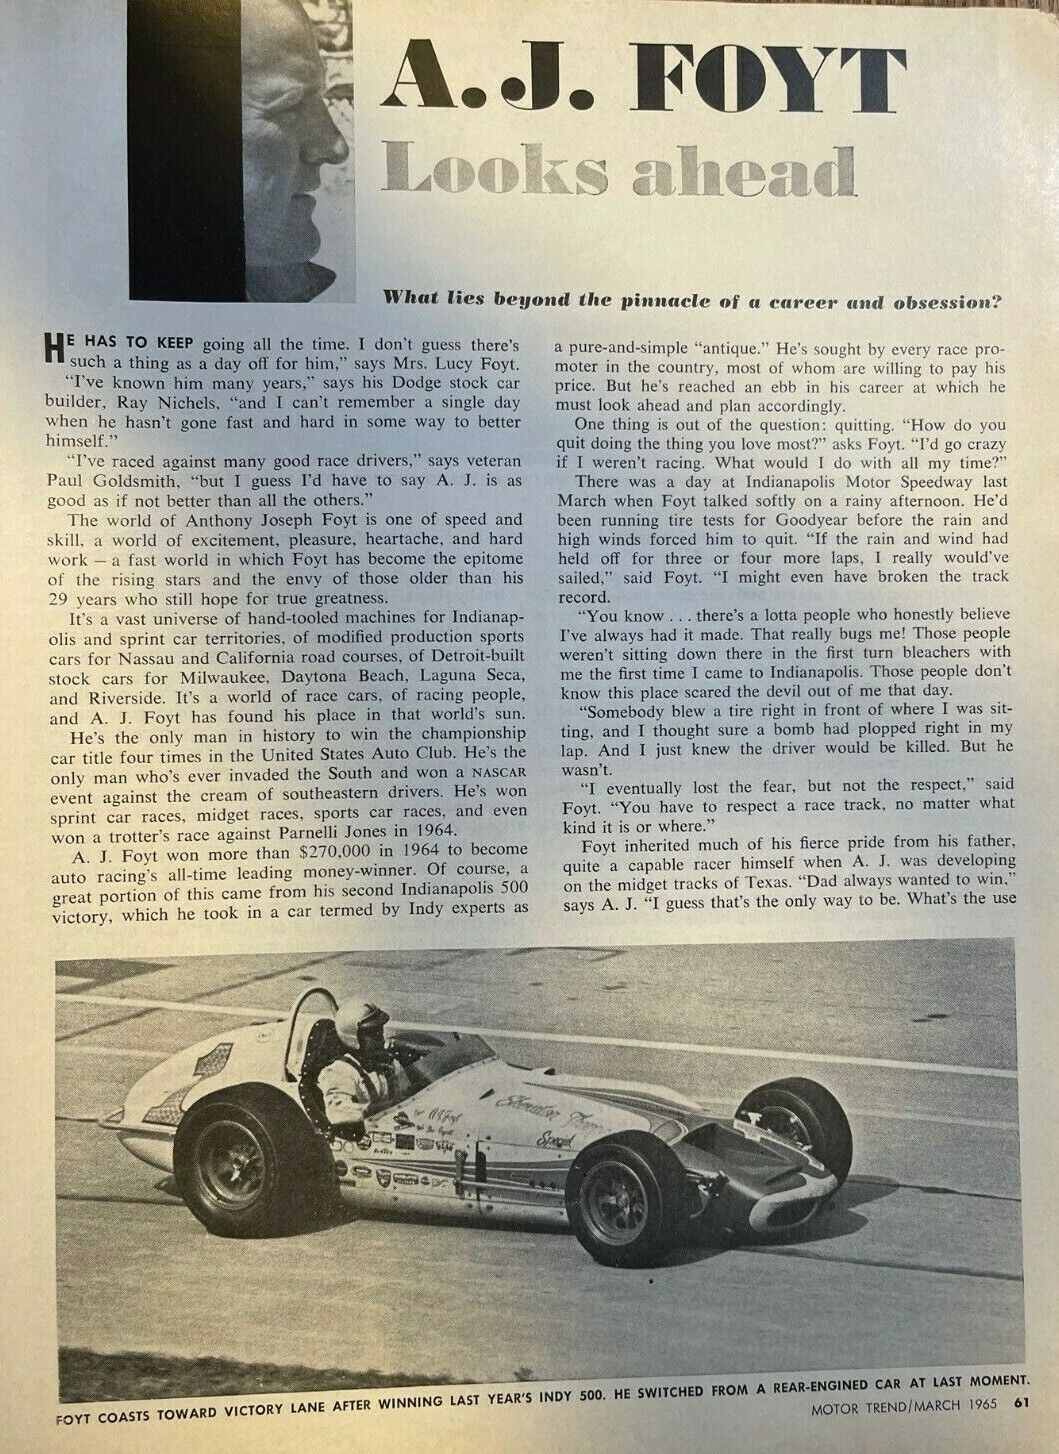 1965 Race Car Driver A. J. Foyt